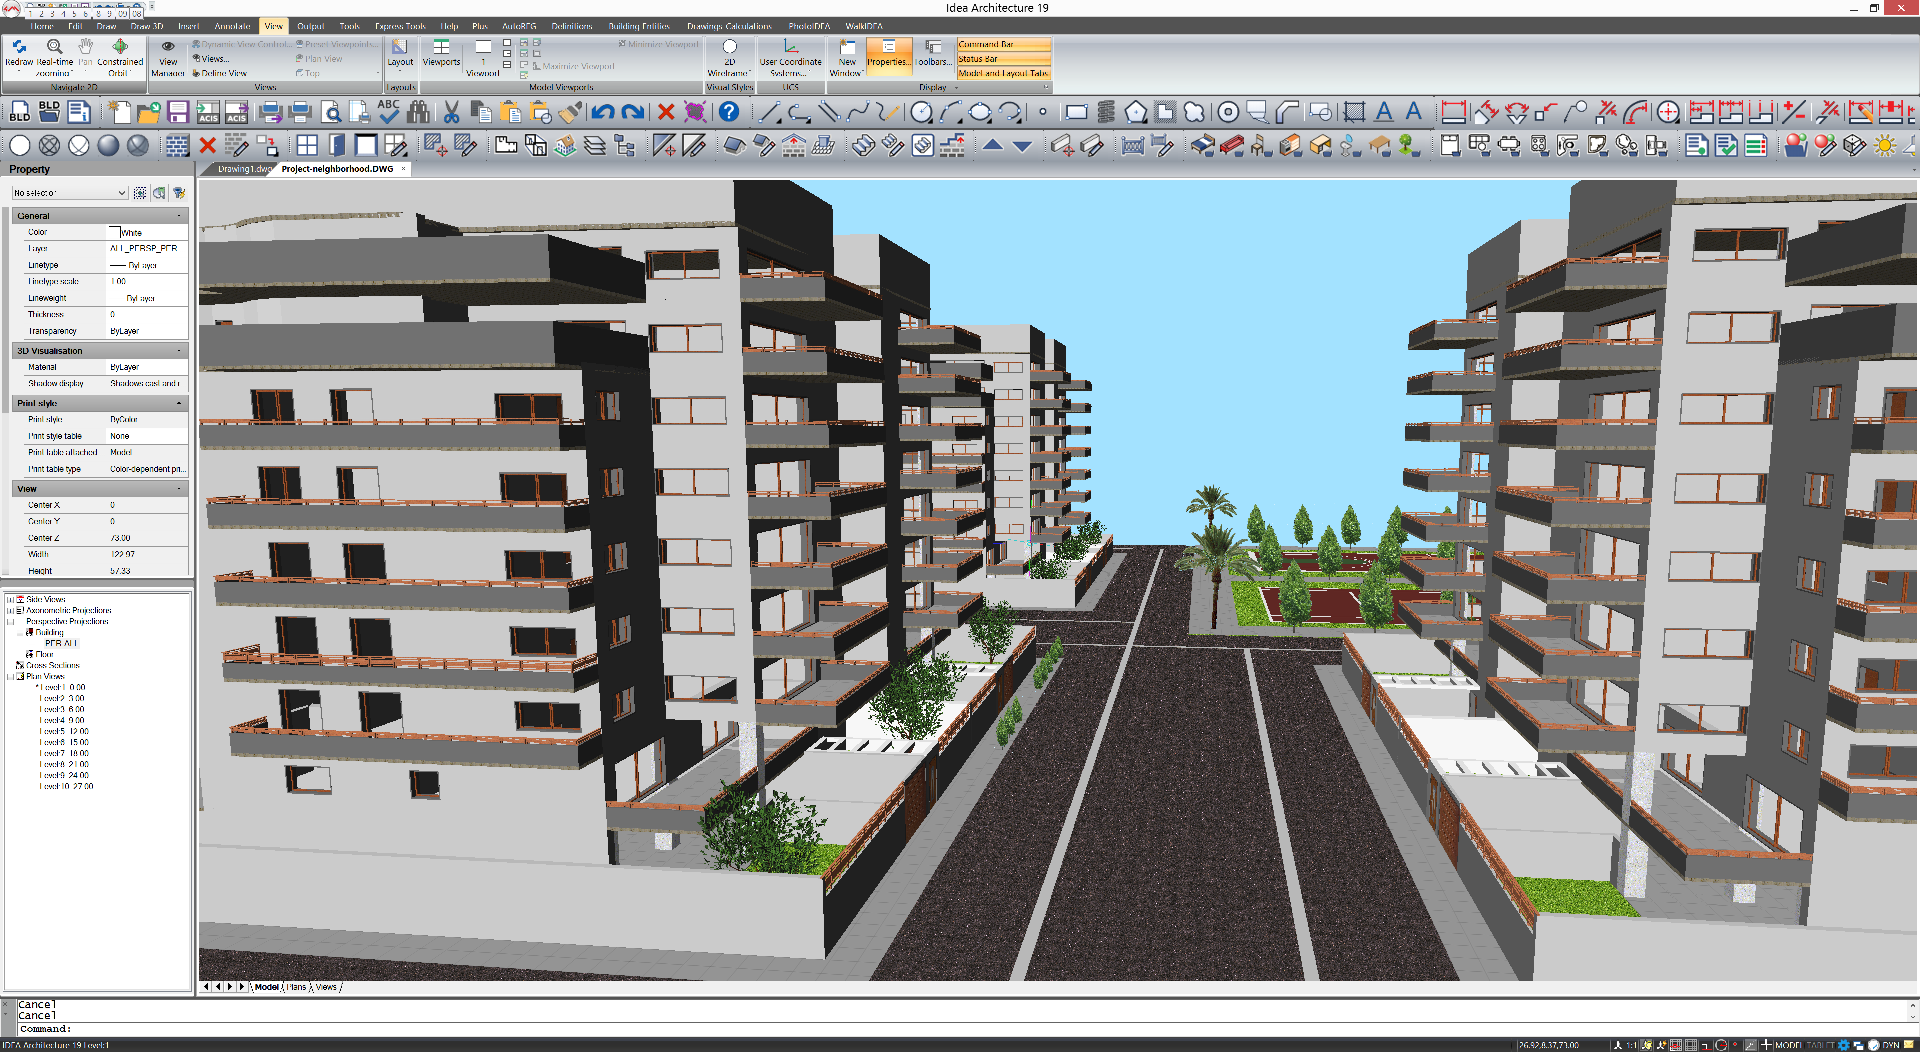 IDEA Architecture Software - IDEA Architecture viewing models